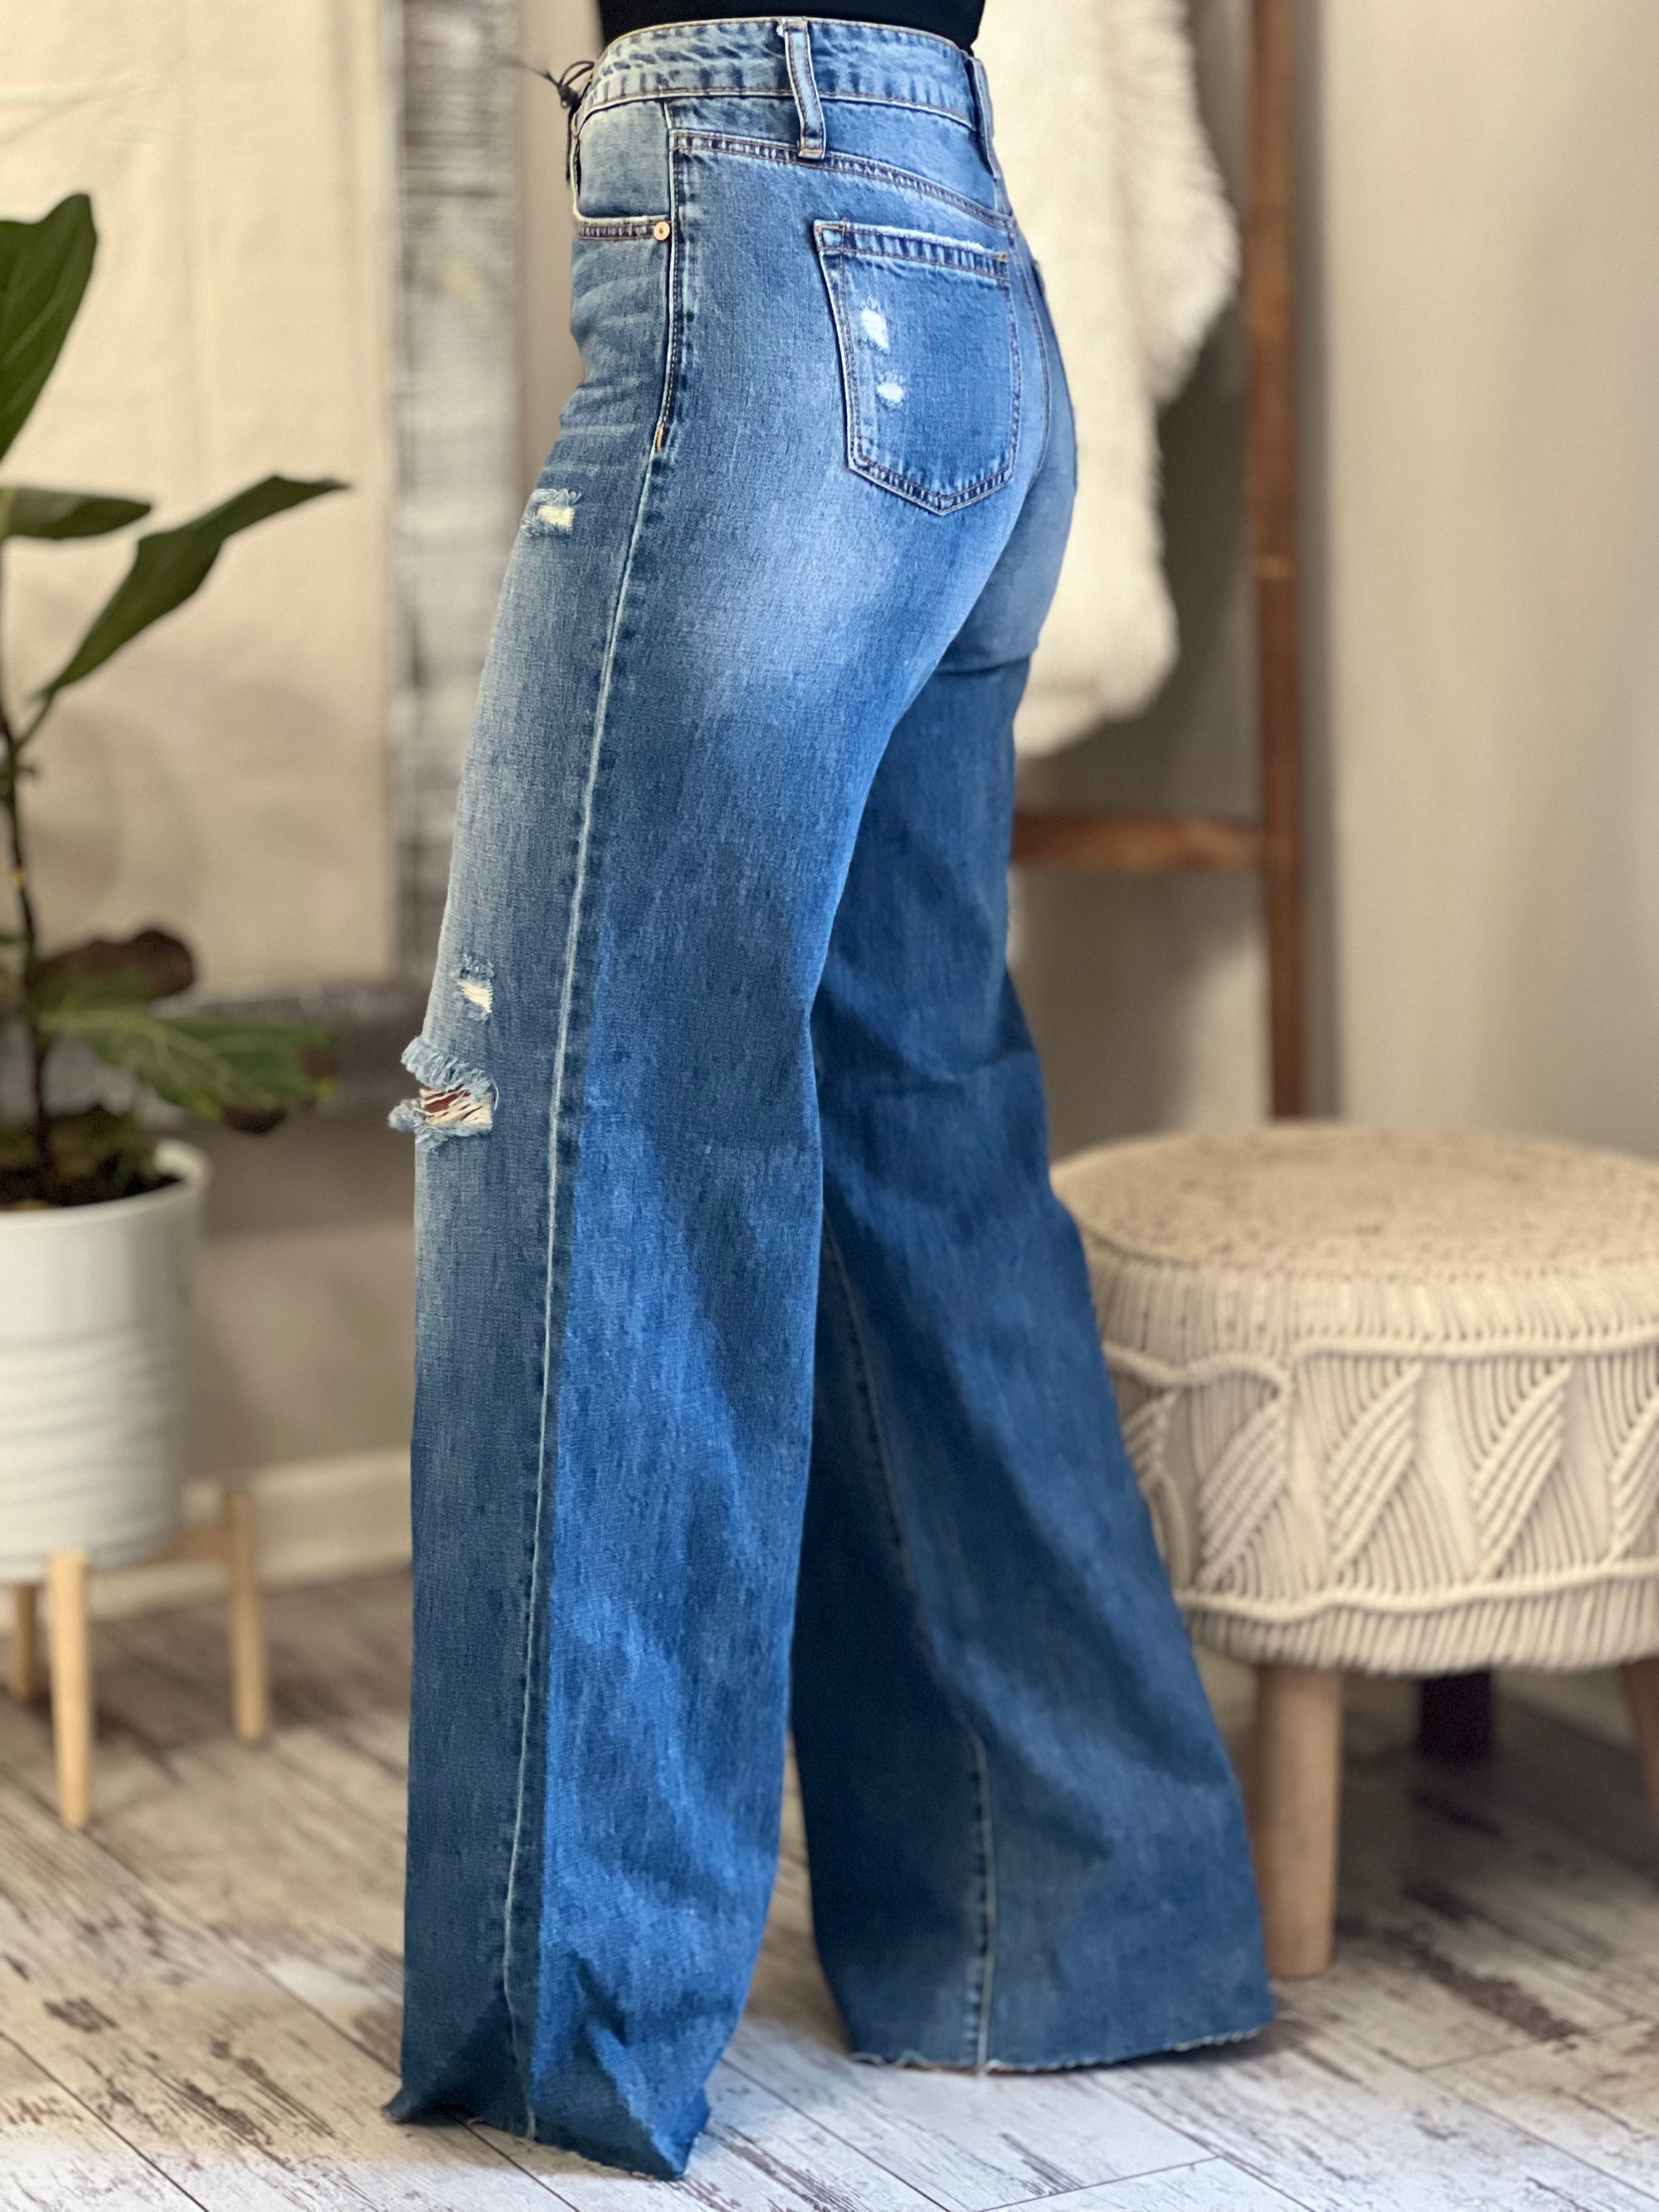 High-Waisted Wide-Leg Released-Hem Jeans For Women